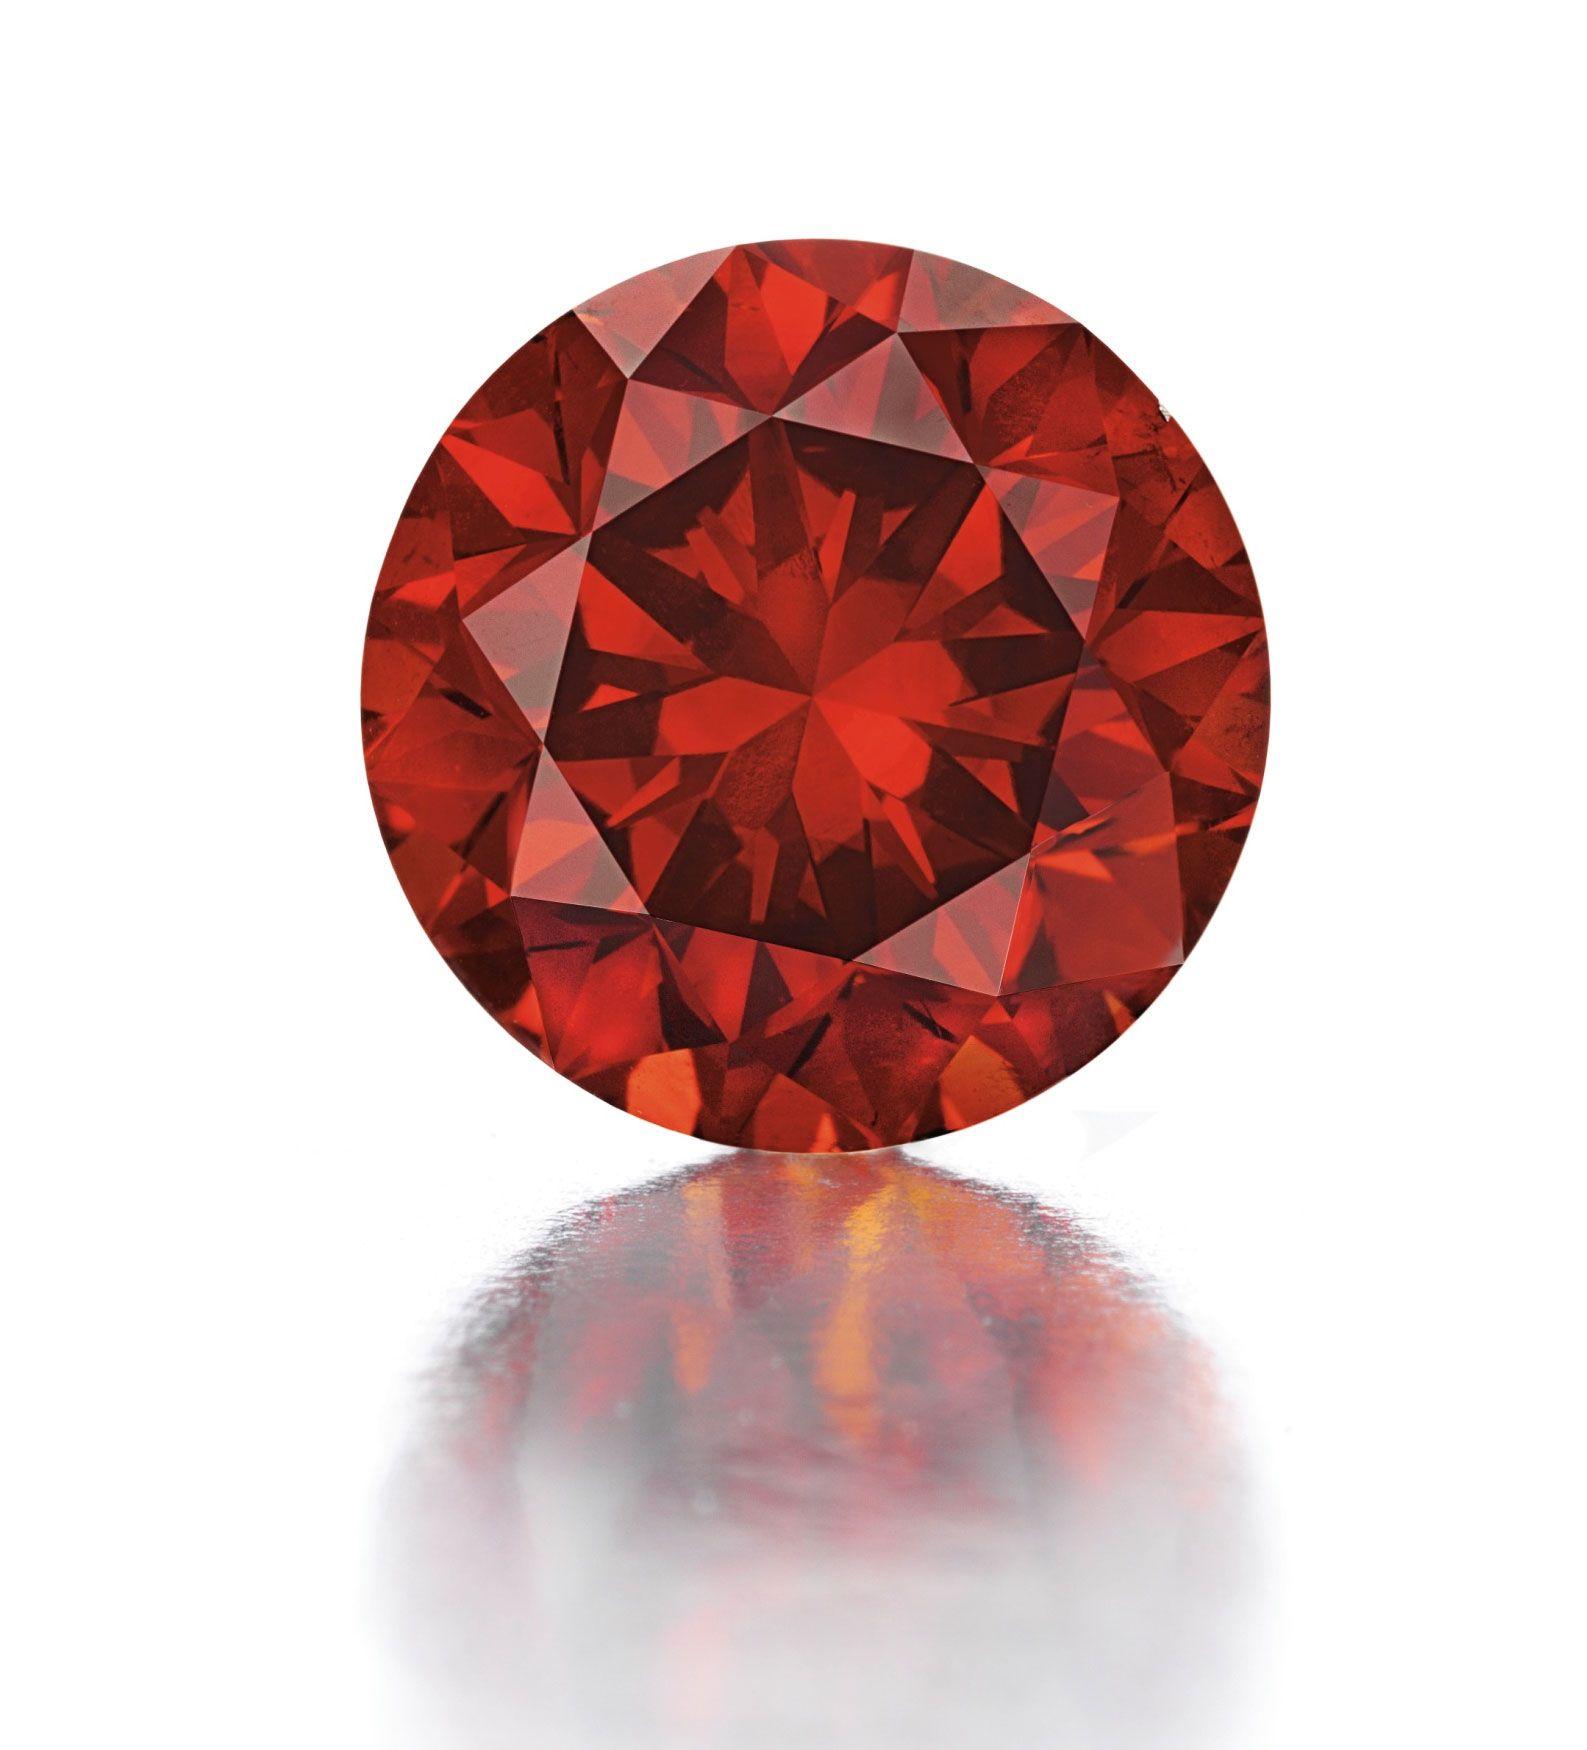 3 Red Diamond Logo - Rare 3 Carat Red Diamond Highlights Upcoming Christie's Auction